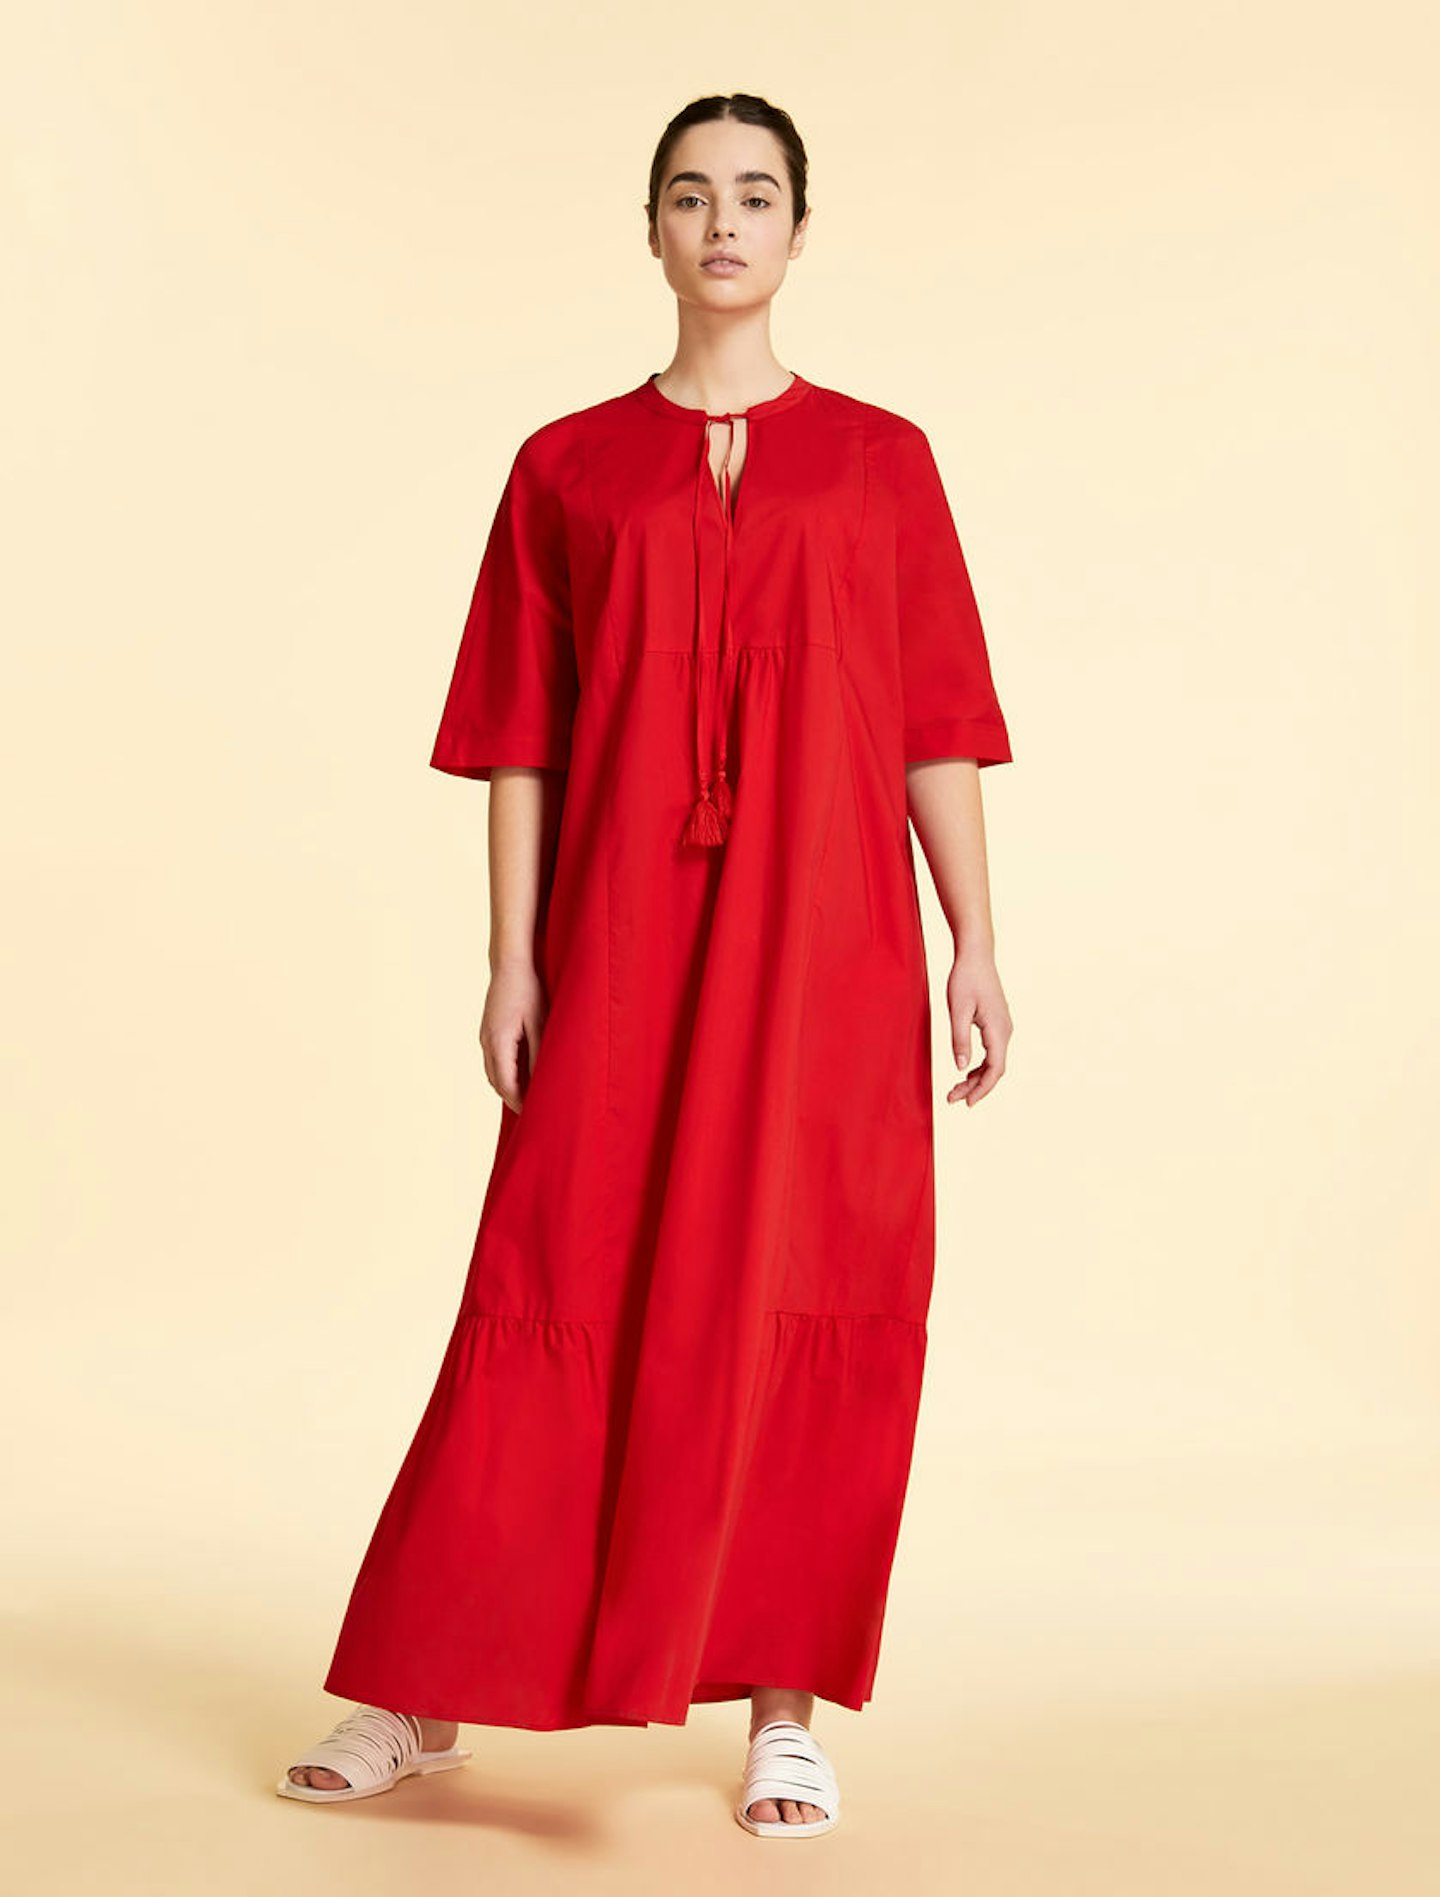 Marina Rinaldi, Cotton Poplin Dress, £252